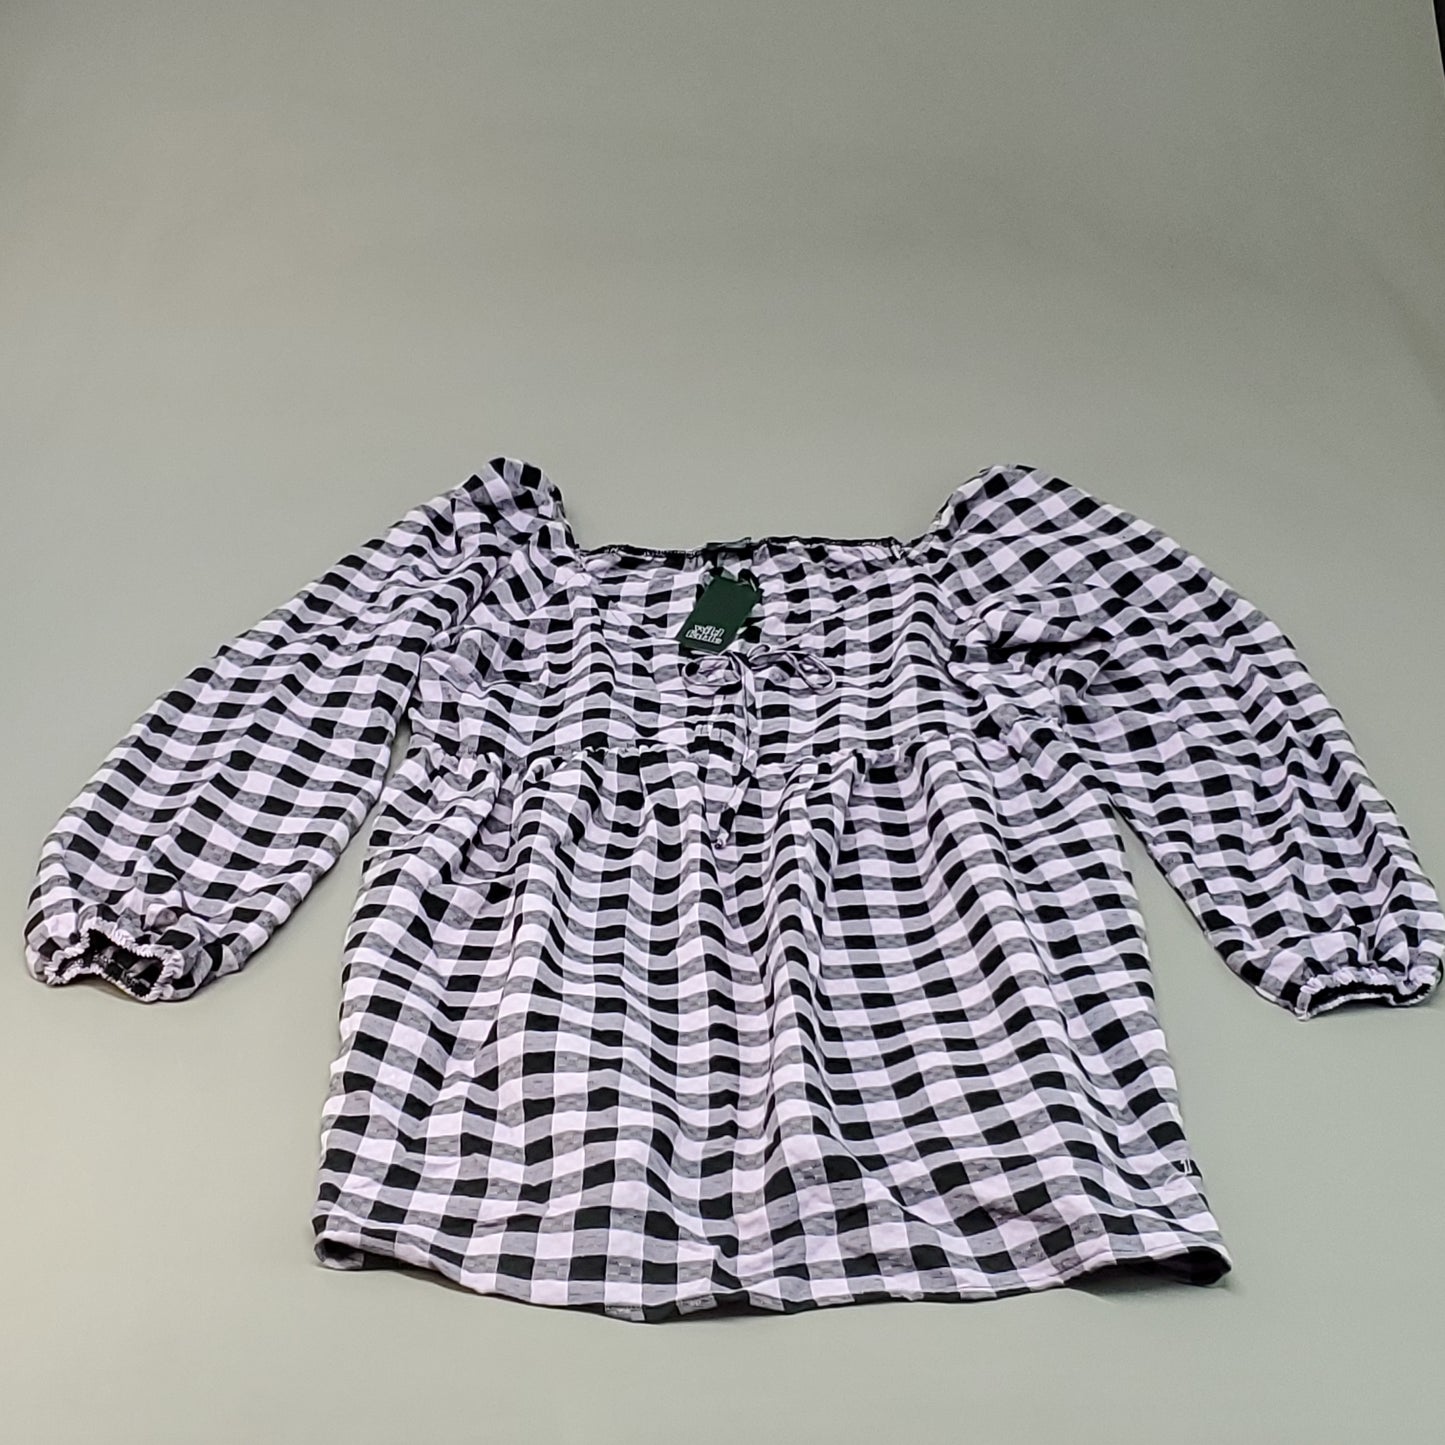 WILD FABLE Women's Amethyst Checkered Dress Sz XL Black/Pink 331 08 6996 (New)